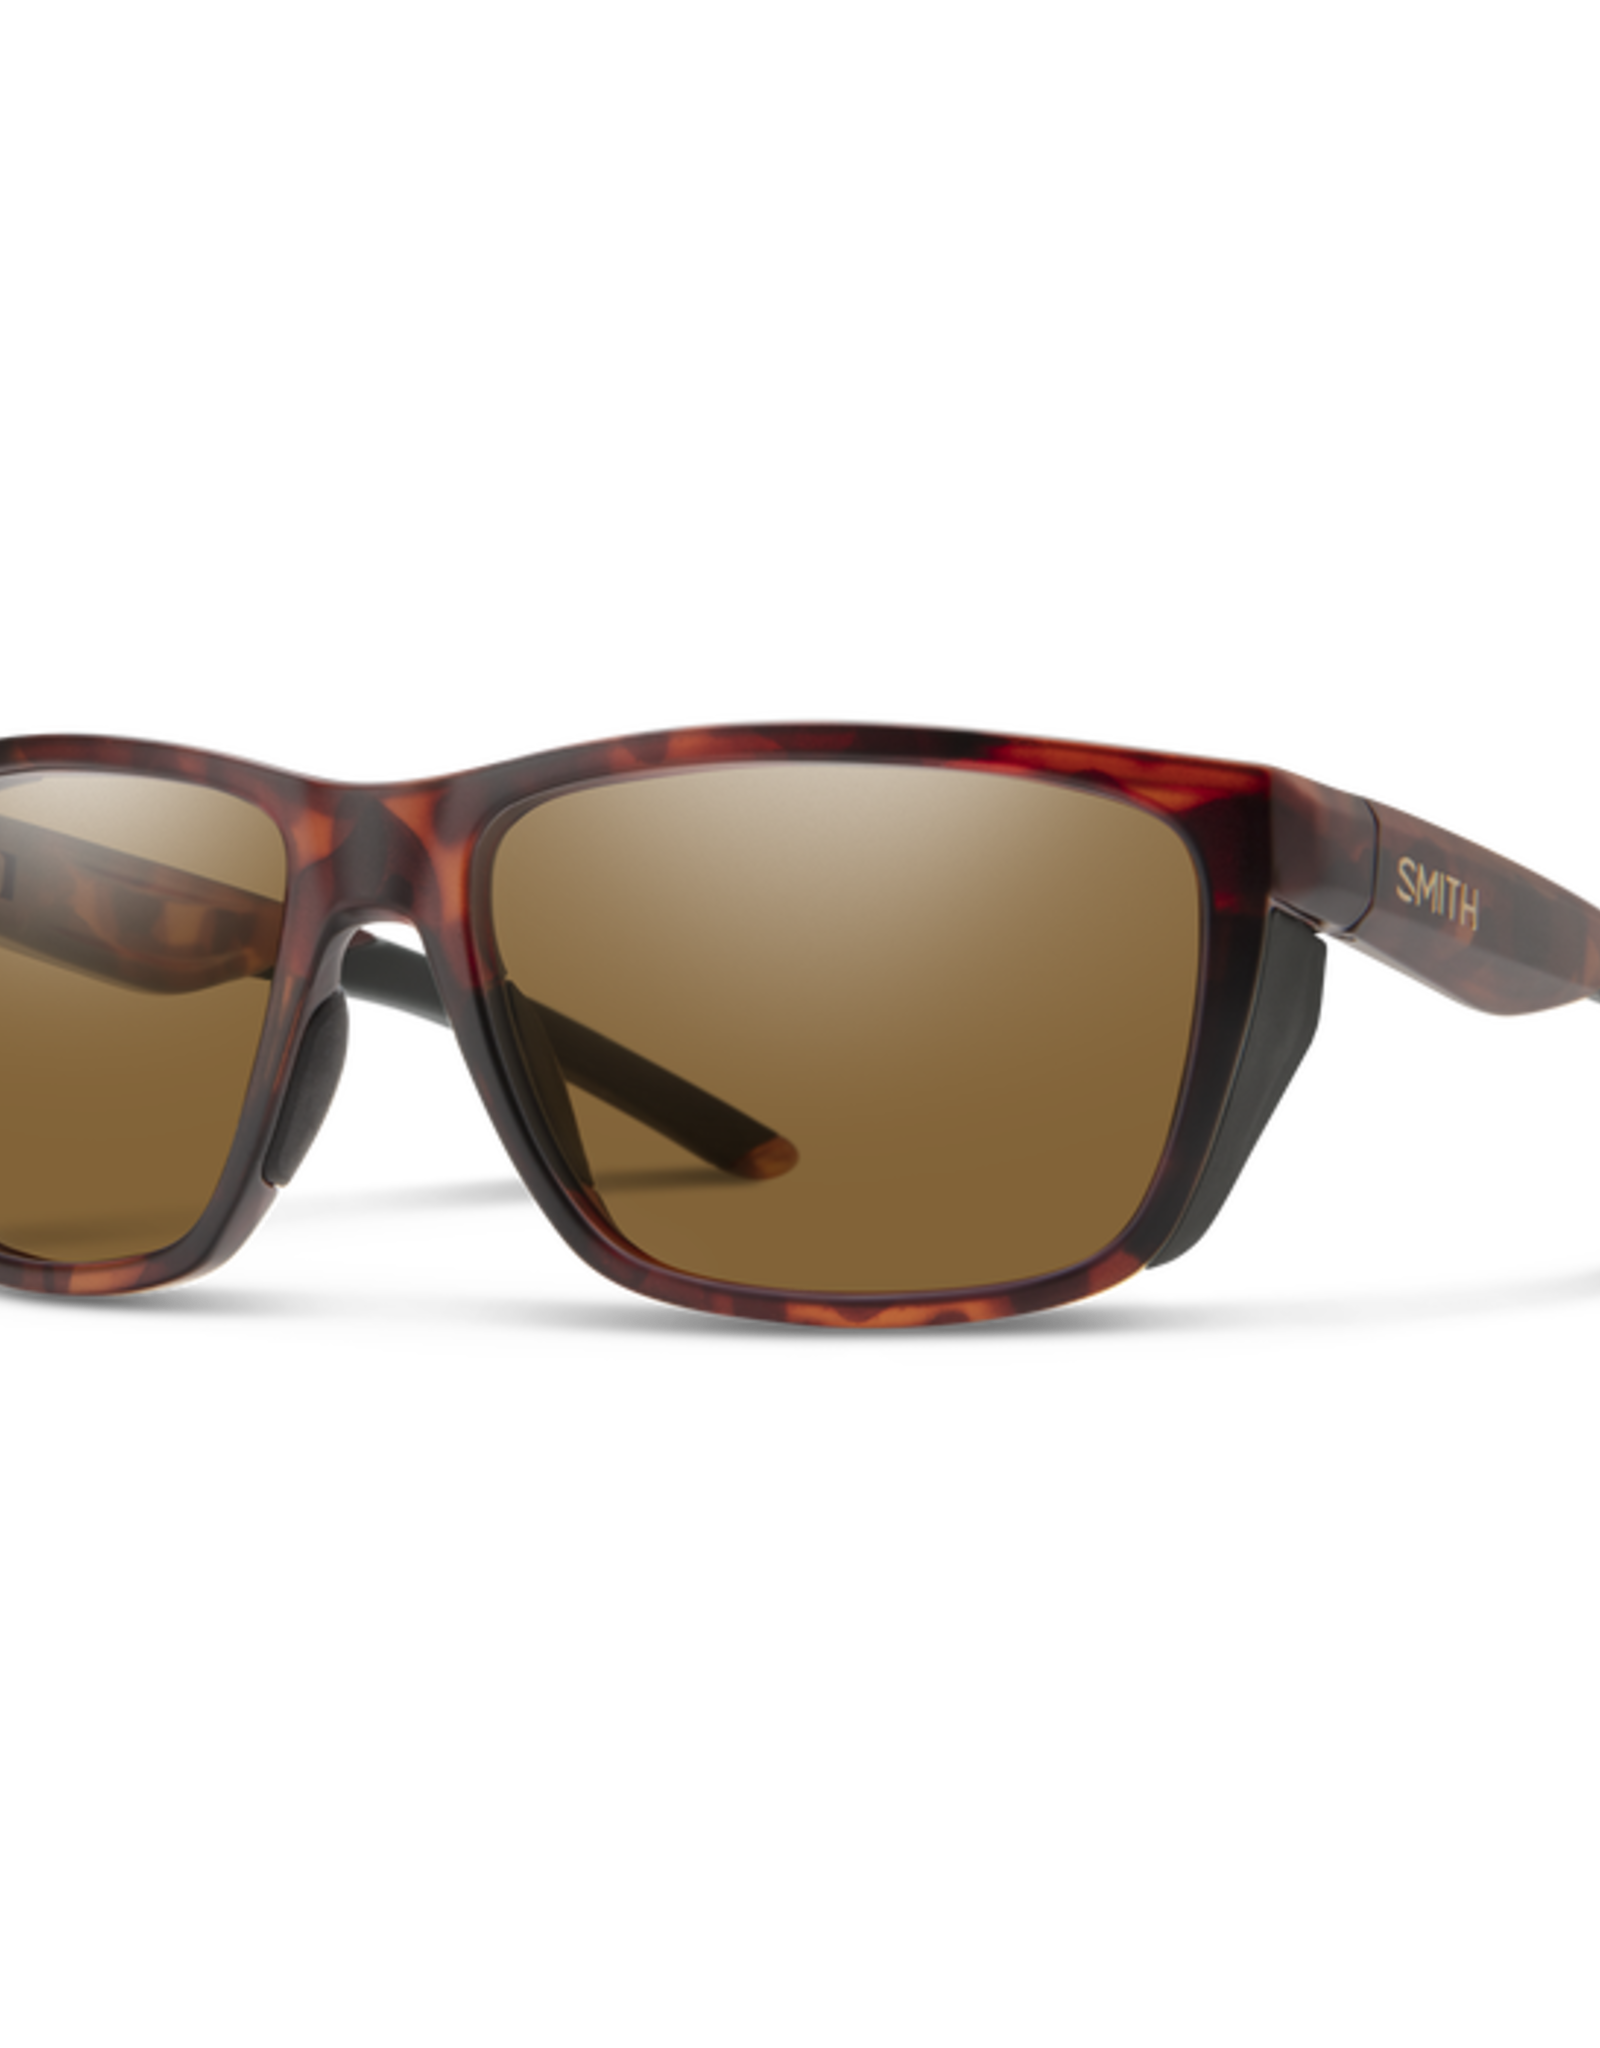 Smith Smith Longfin Sunglasses - Matte Tortoise || ChromaPop Polarized Brown